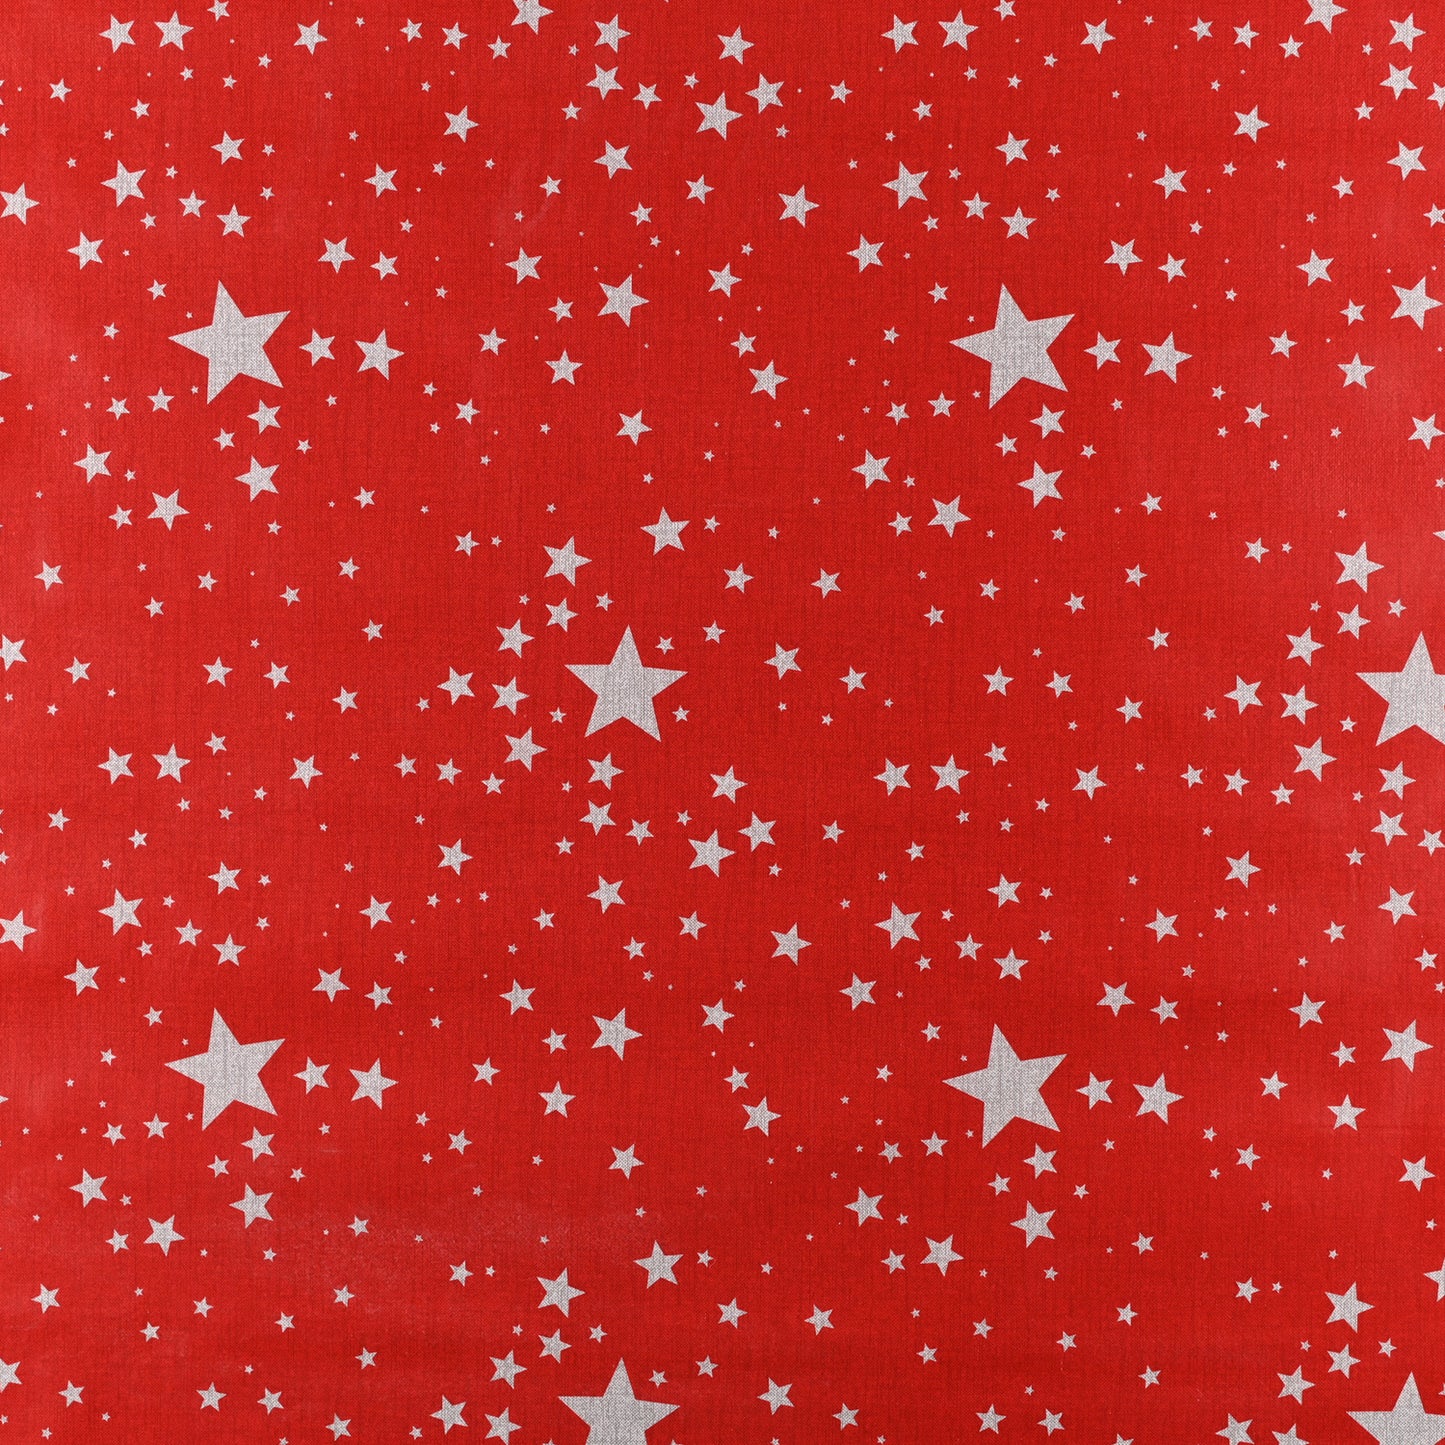 PVC Printed Table Cloth Plastic Red/White Stars